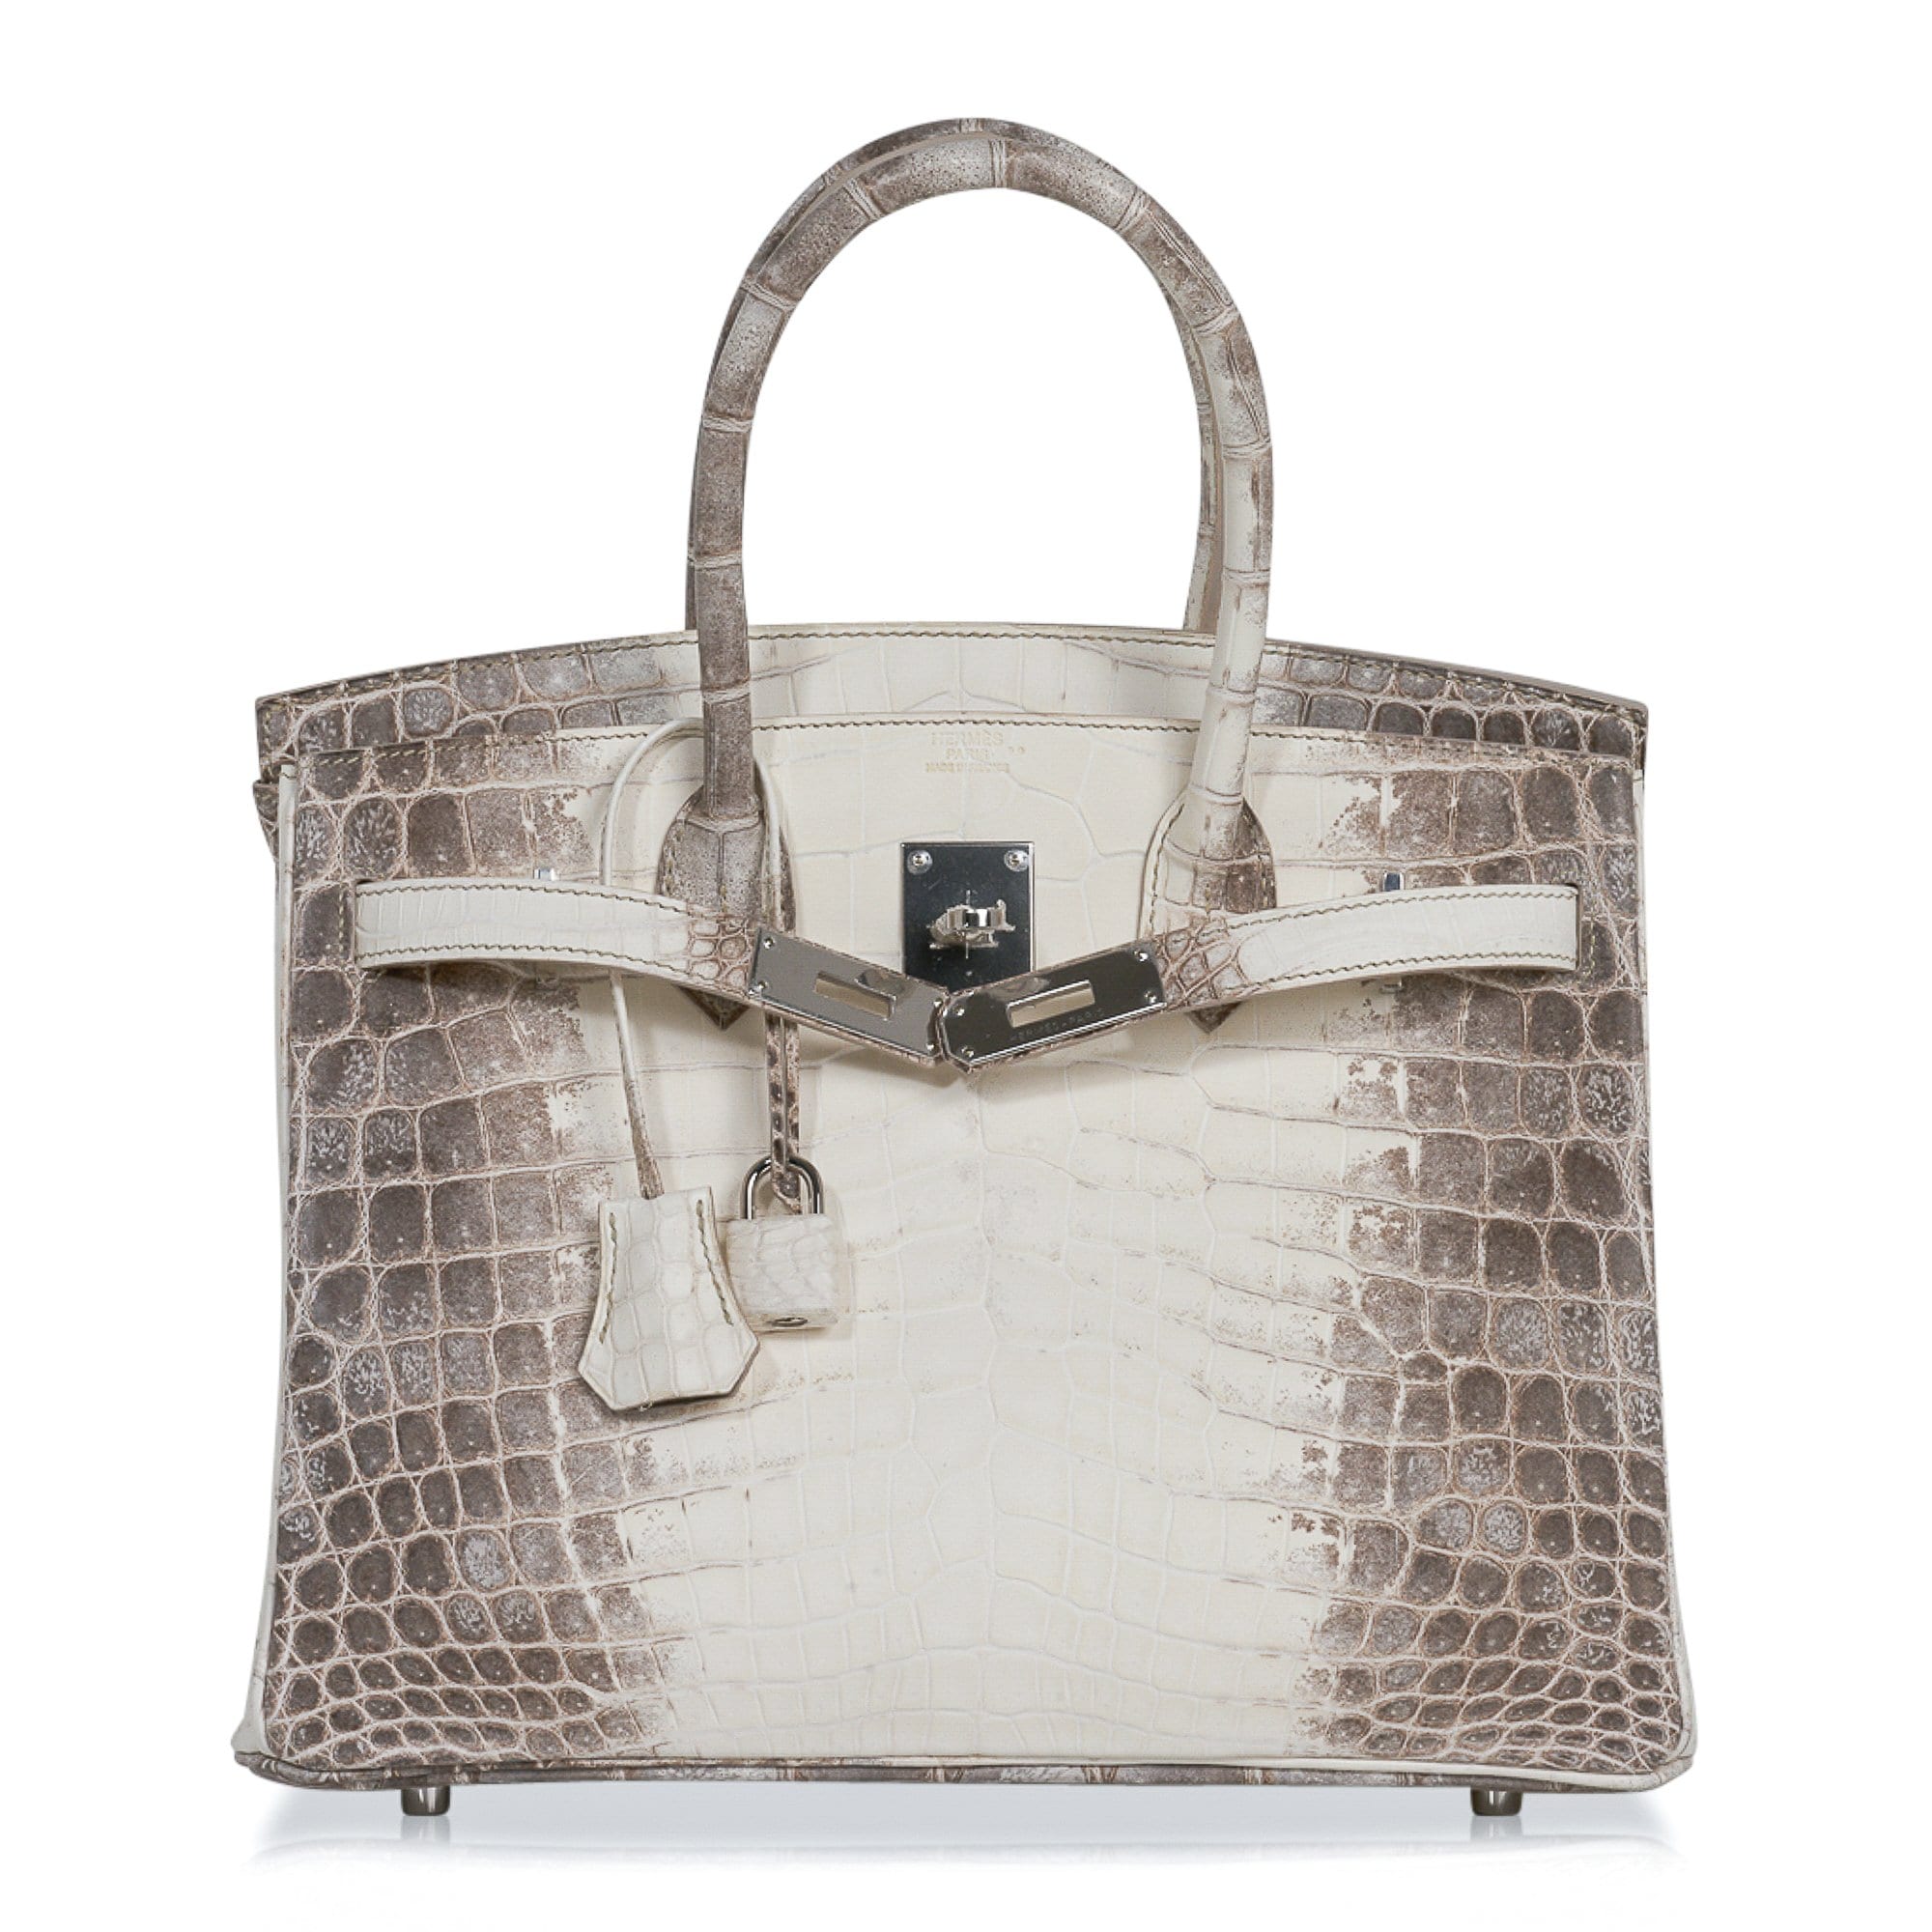 HERMÈS Himalaya Birkin 30 handbag in Matte Nile Croc with